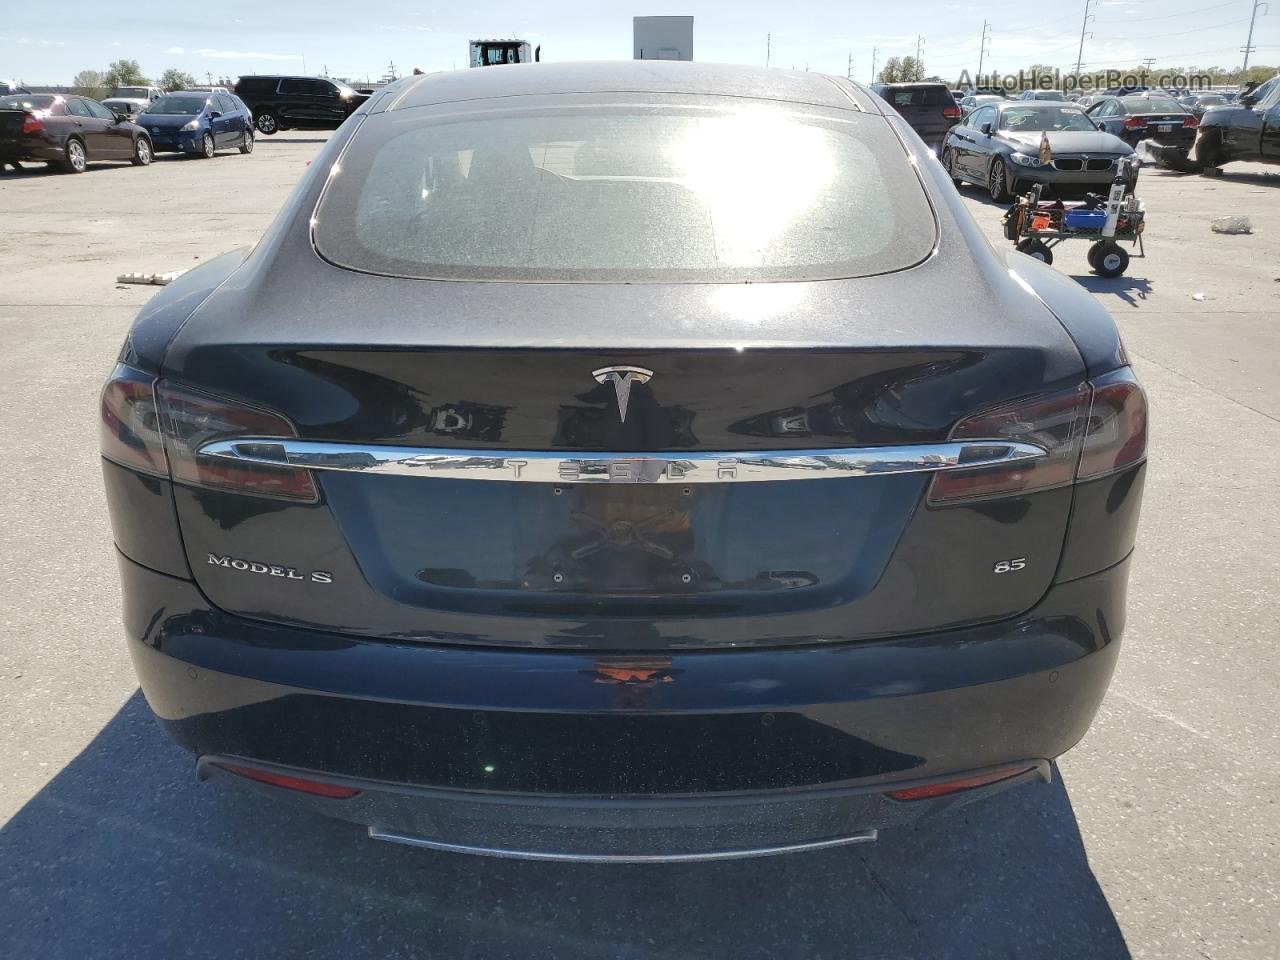 2014 Tesla Model S  Синий vin: 5YJSA1H16EFP43800